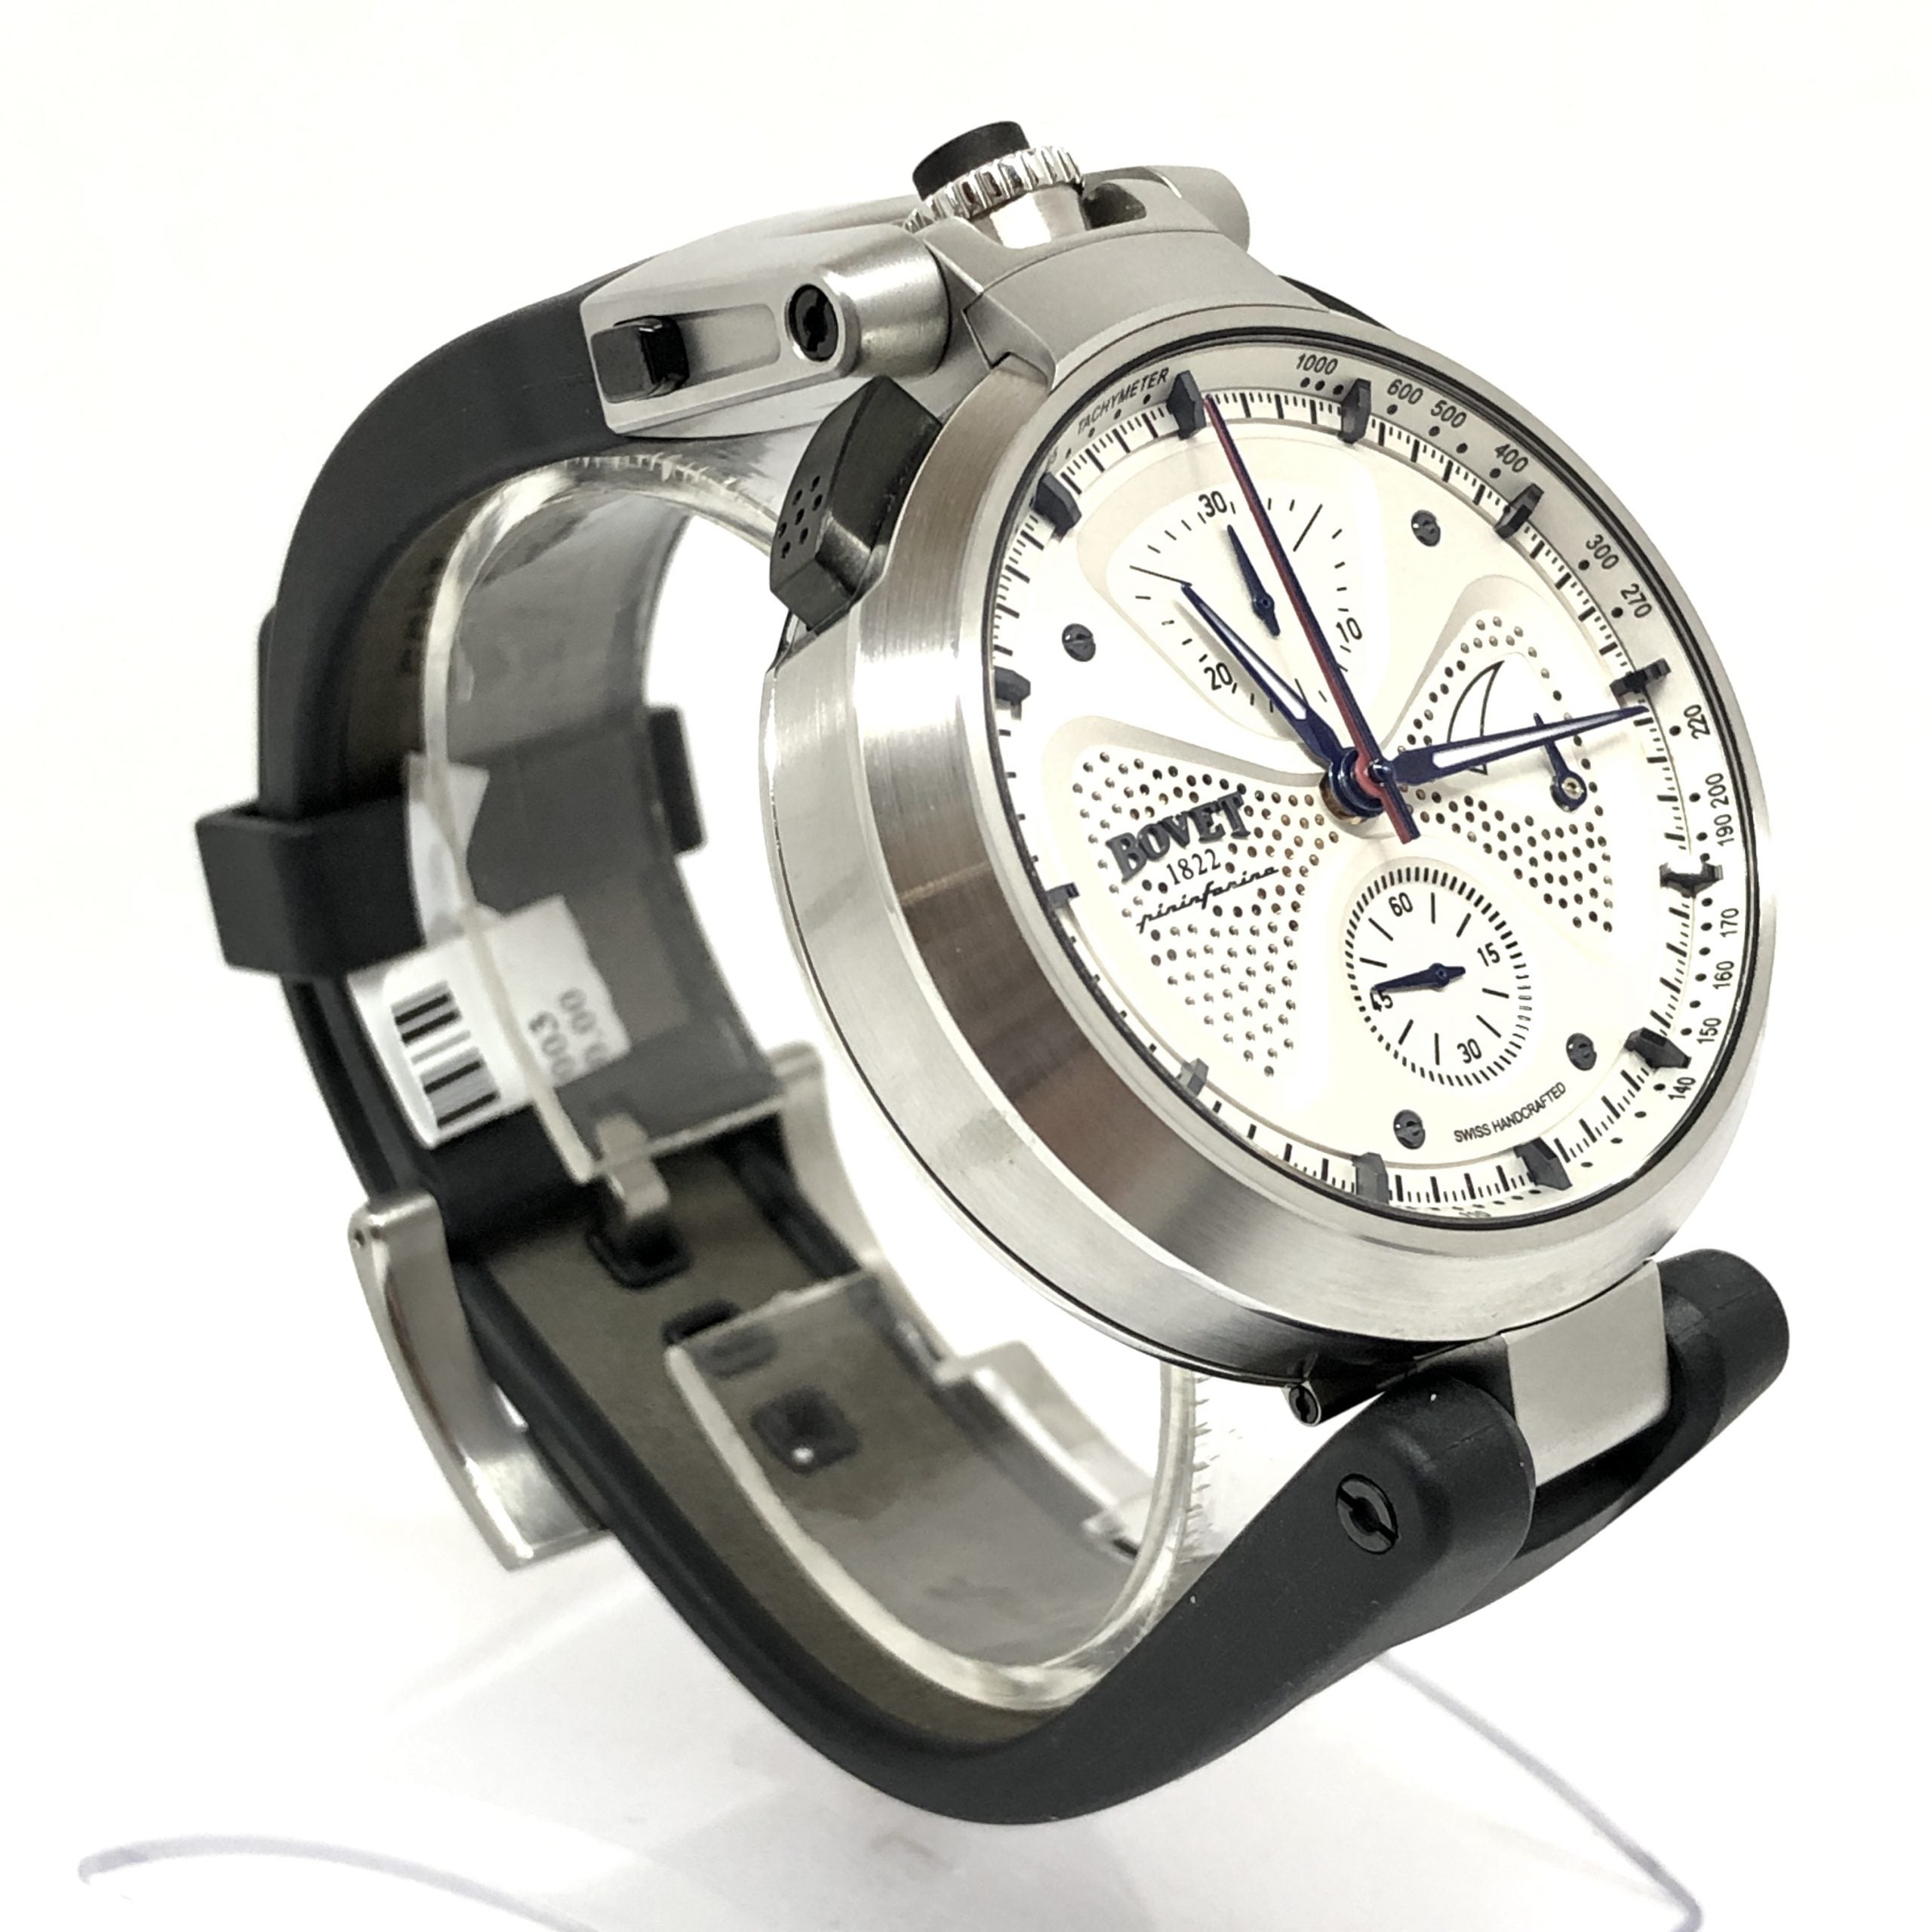 Bovet Sergio Split-Second Chronograph Stainless Steel Men's Watch